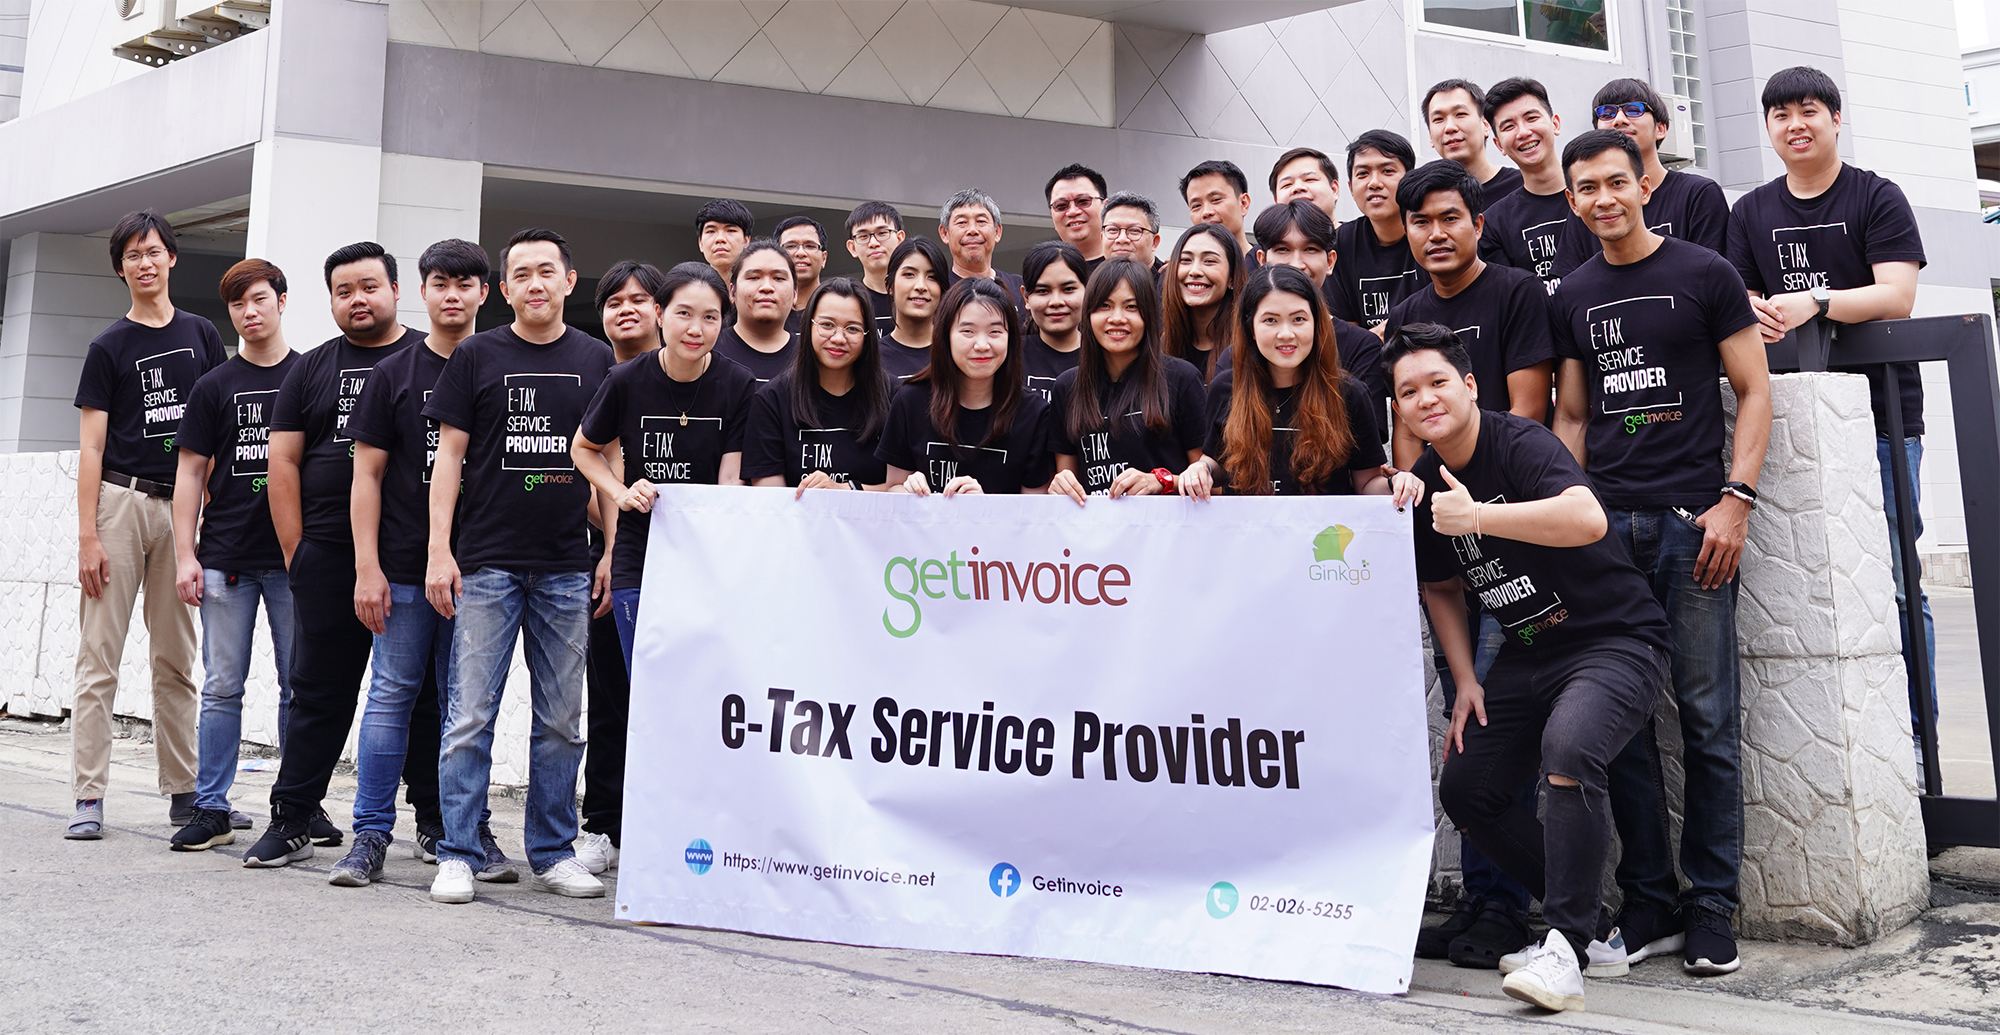 etax service provider group